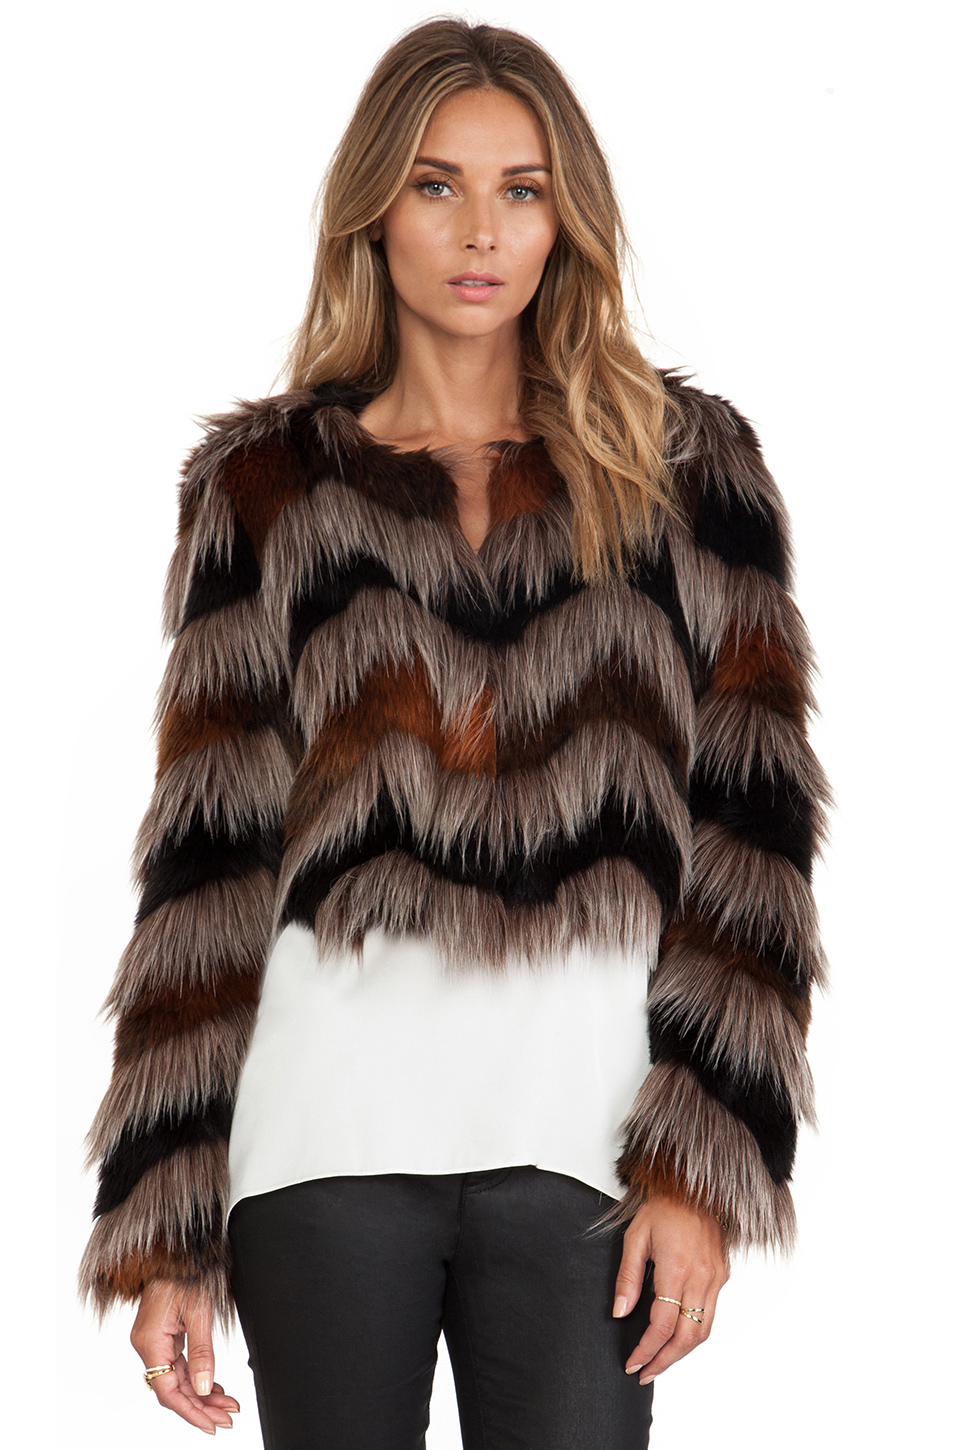 Fake Fur Coats For Sale | Fashion Women's Coat 2017